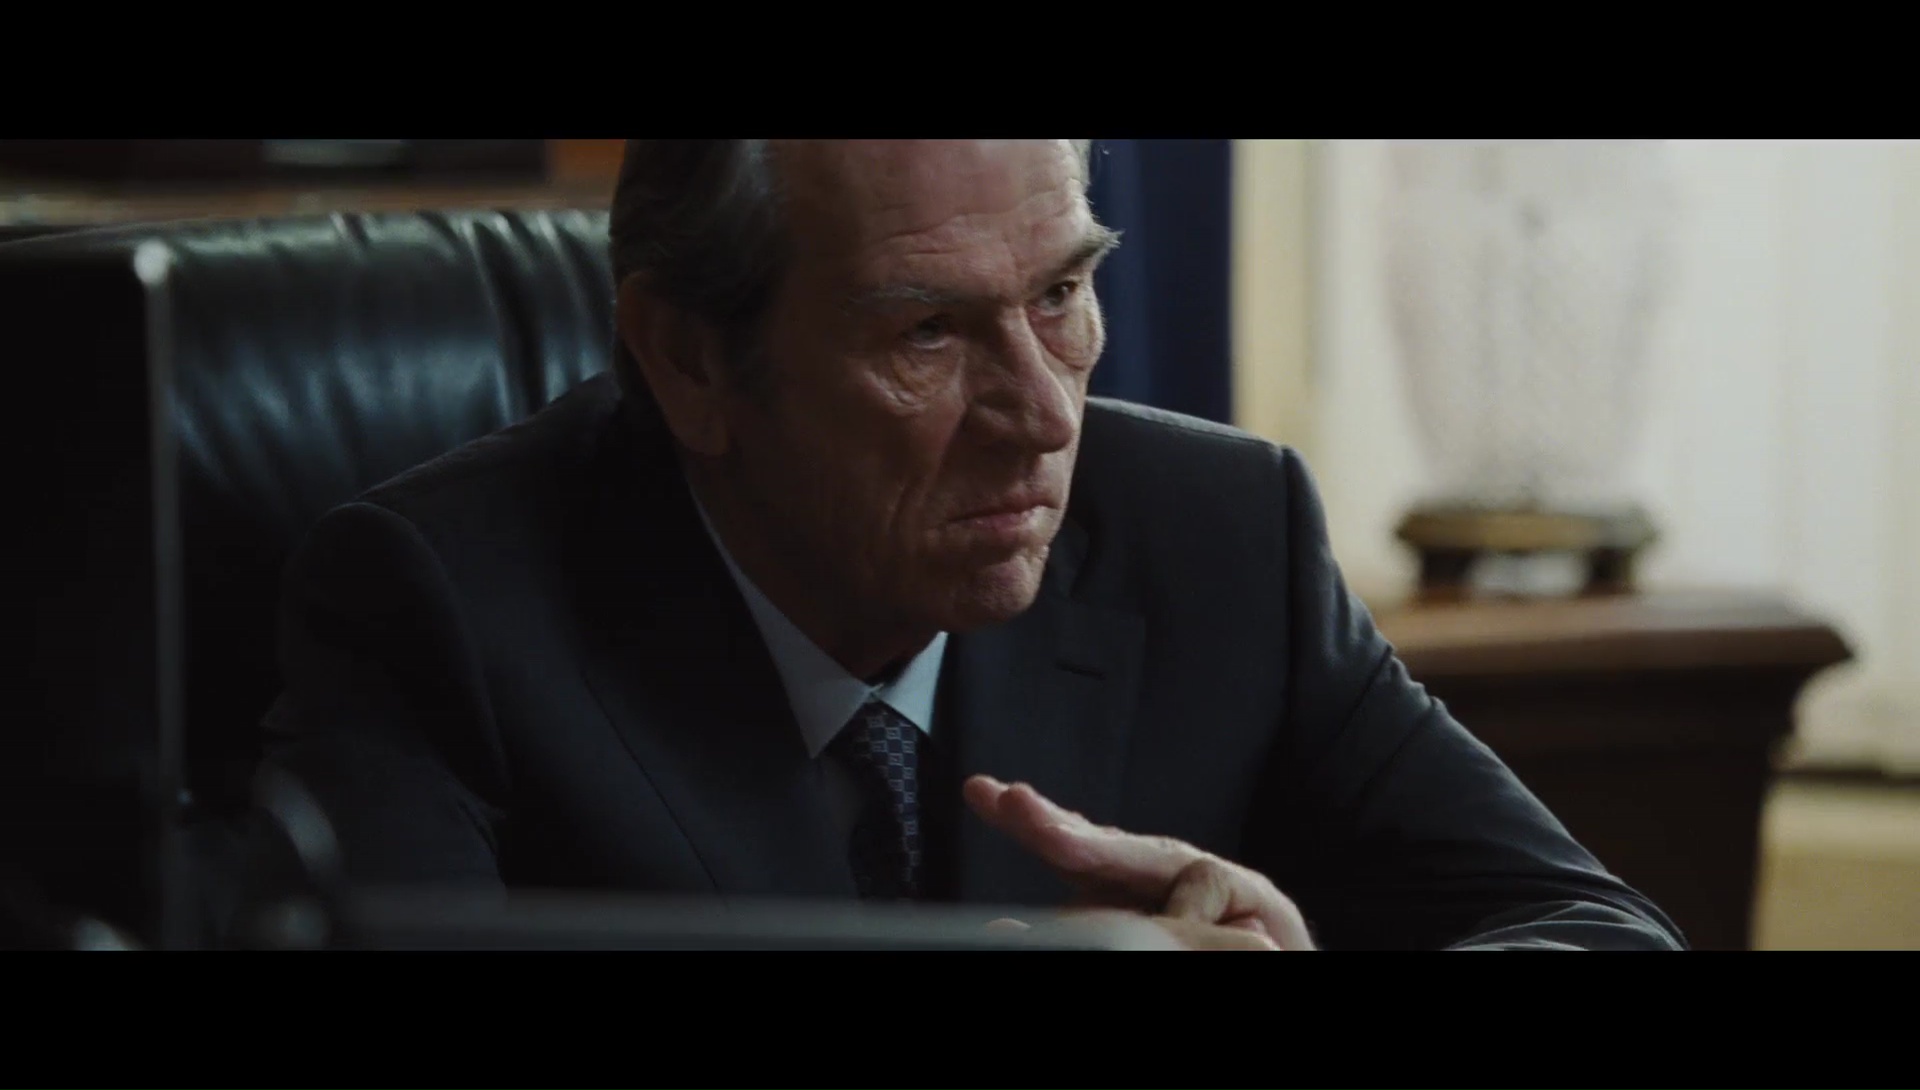 Jason Bourne HD1080p Lat-Cast-Ing 5.1 (2016) 4YbXpsry